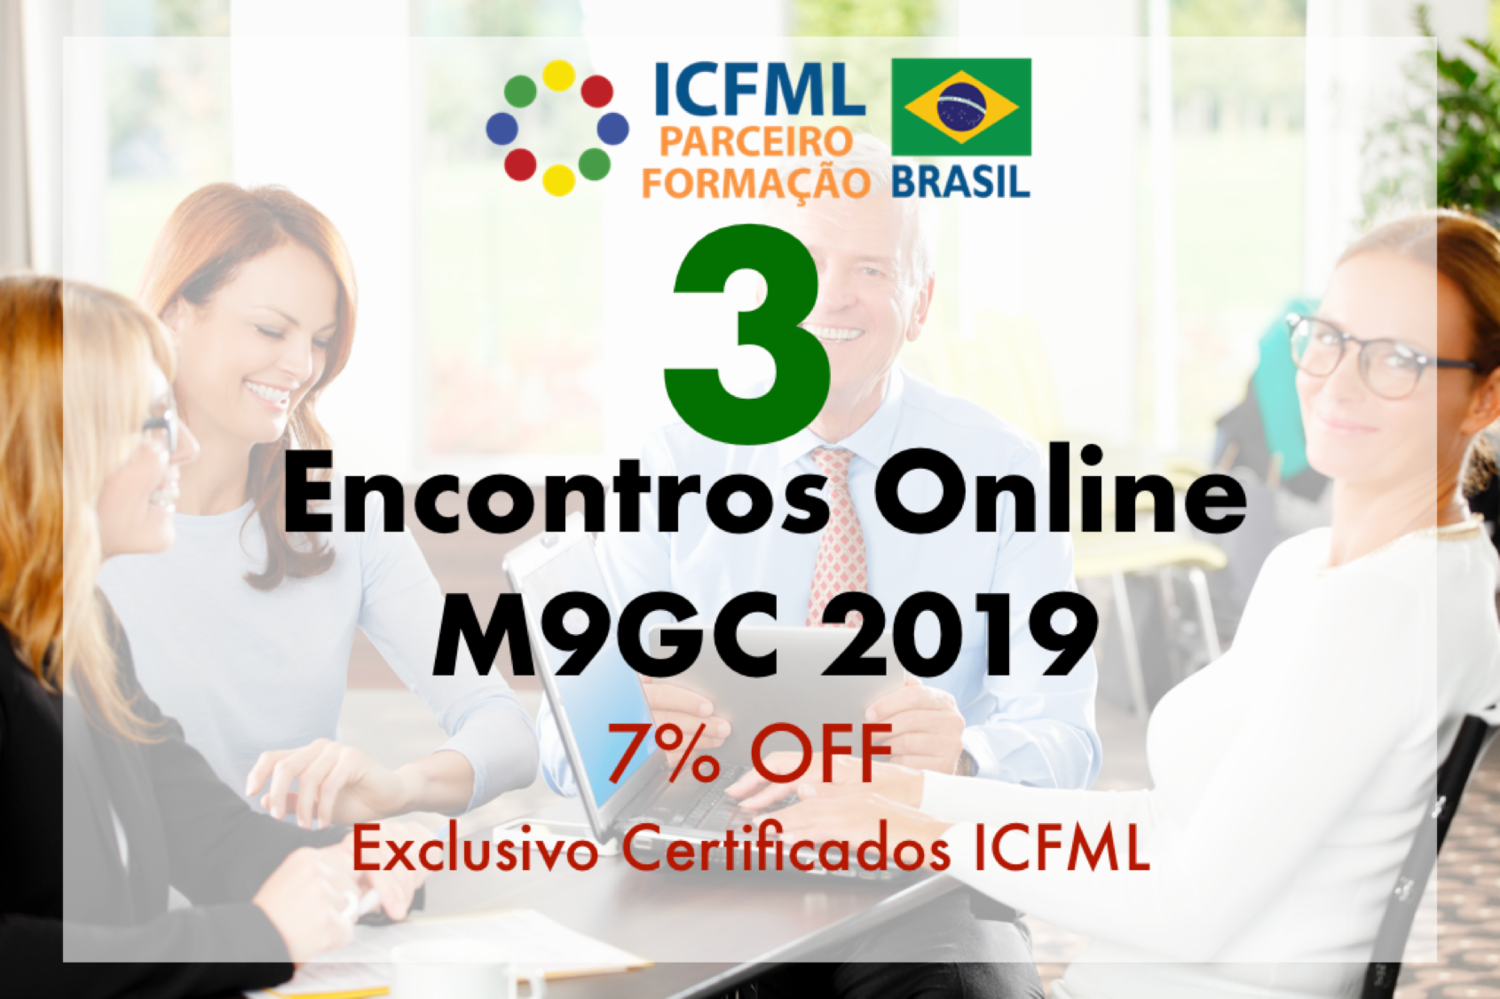 3  Encontros Online M9GC 2019 - Exclusivo para Certificados ICFML